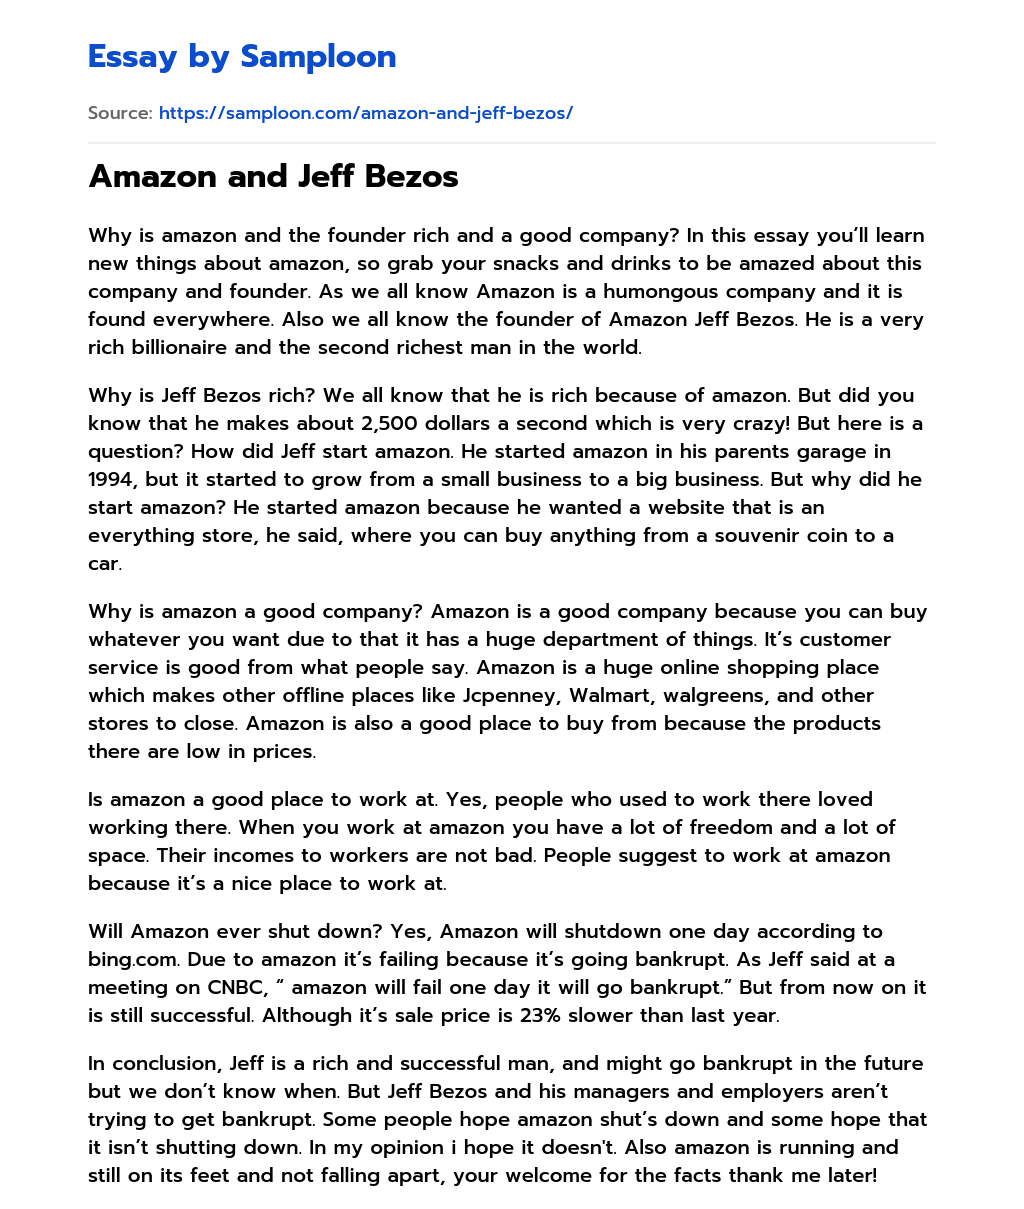 Amazon and Jeff Bezos essay